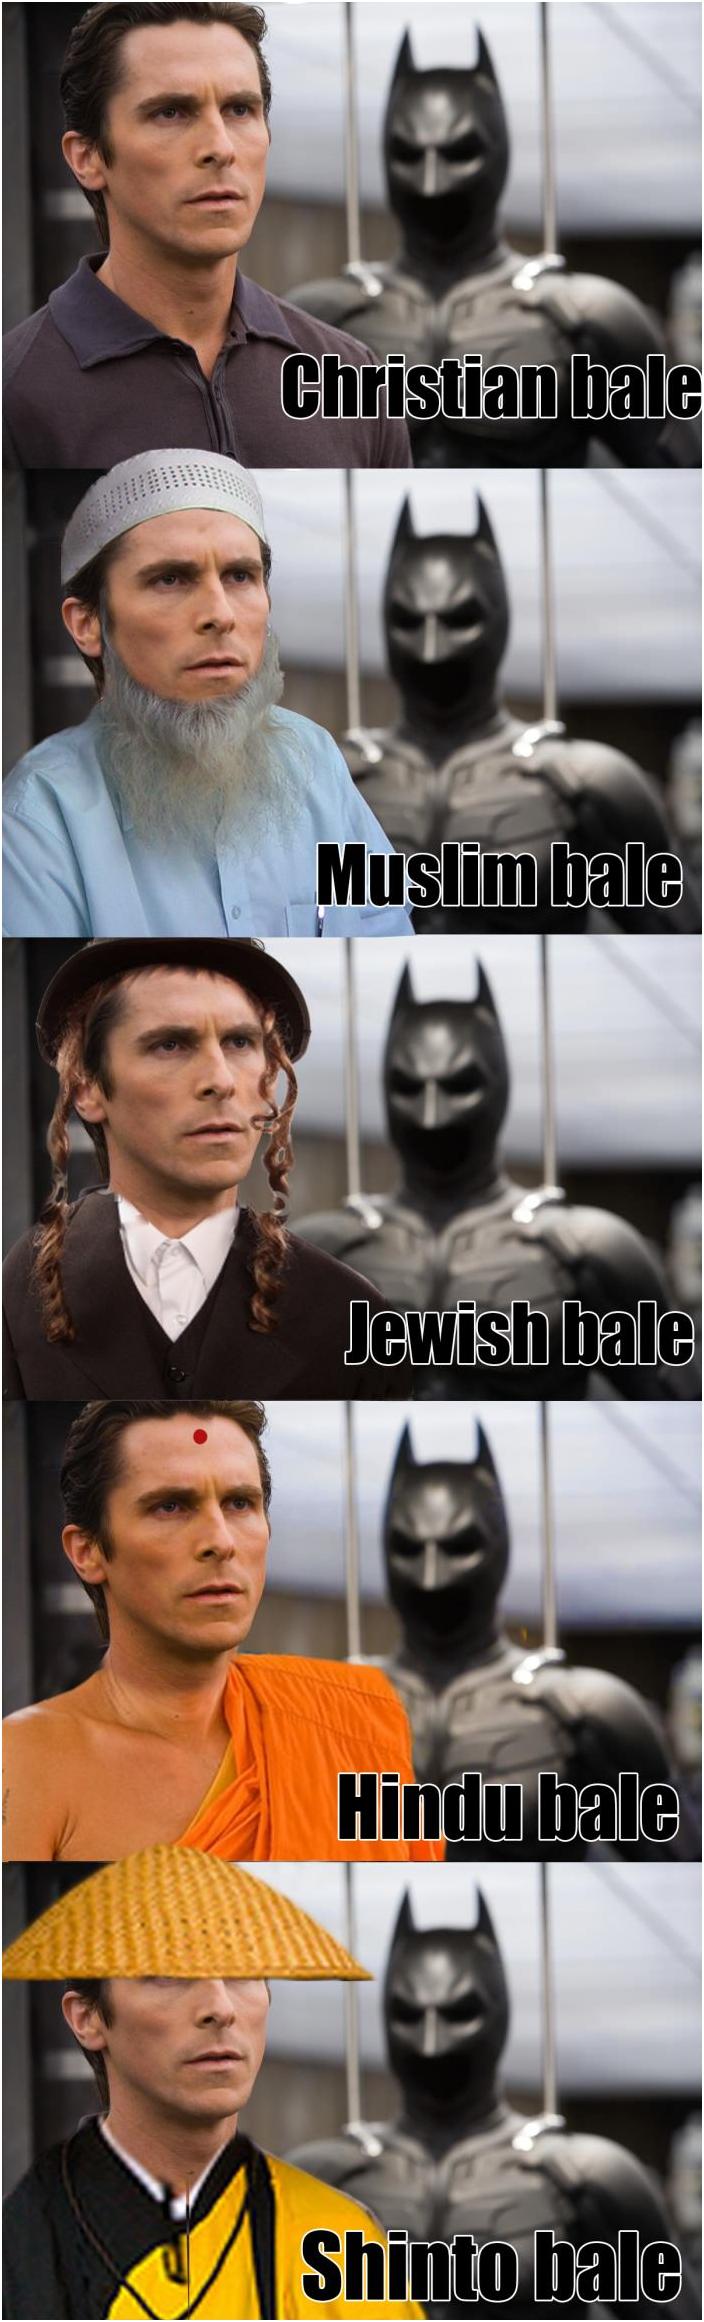 christian bale batman - Christian bale Muslim hale Jewish bale Hindu bale Shinto bale